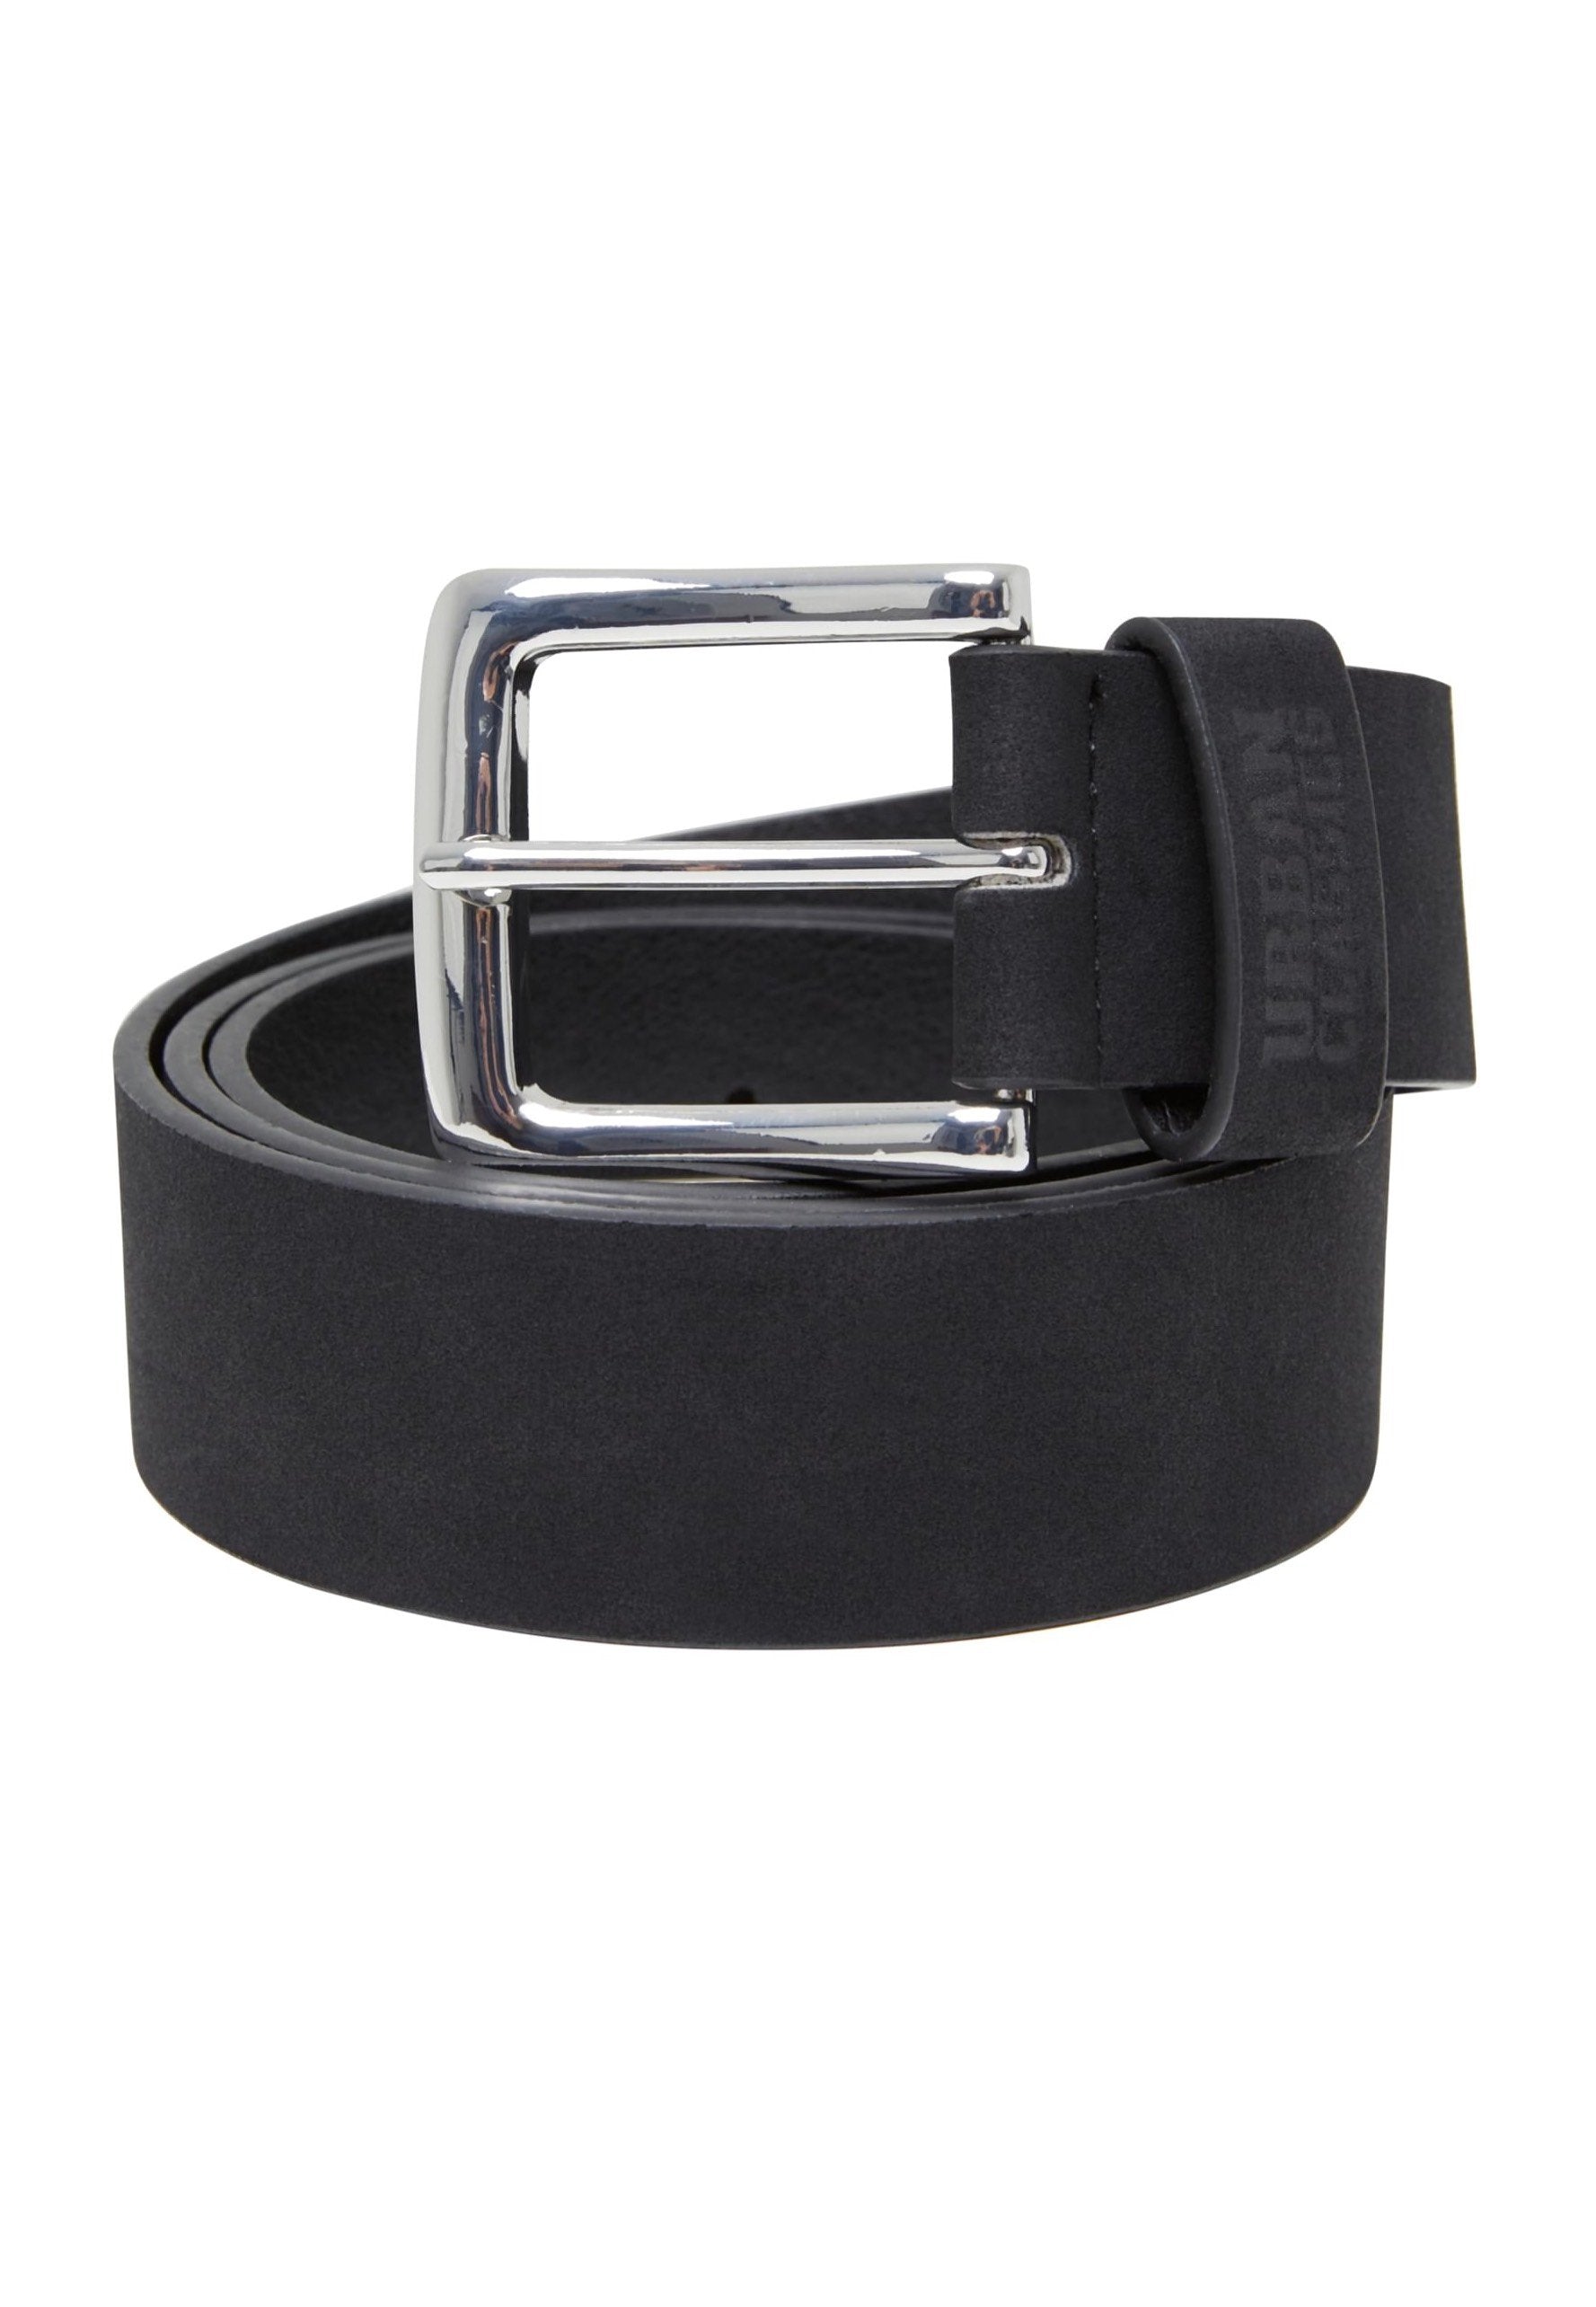 Urban Classics - Suede Leather Imitation Black/Silver - Belt